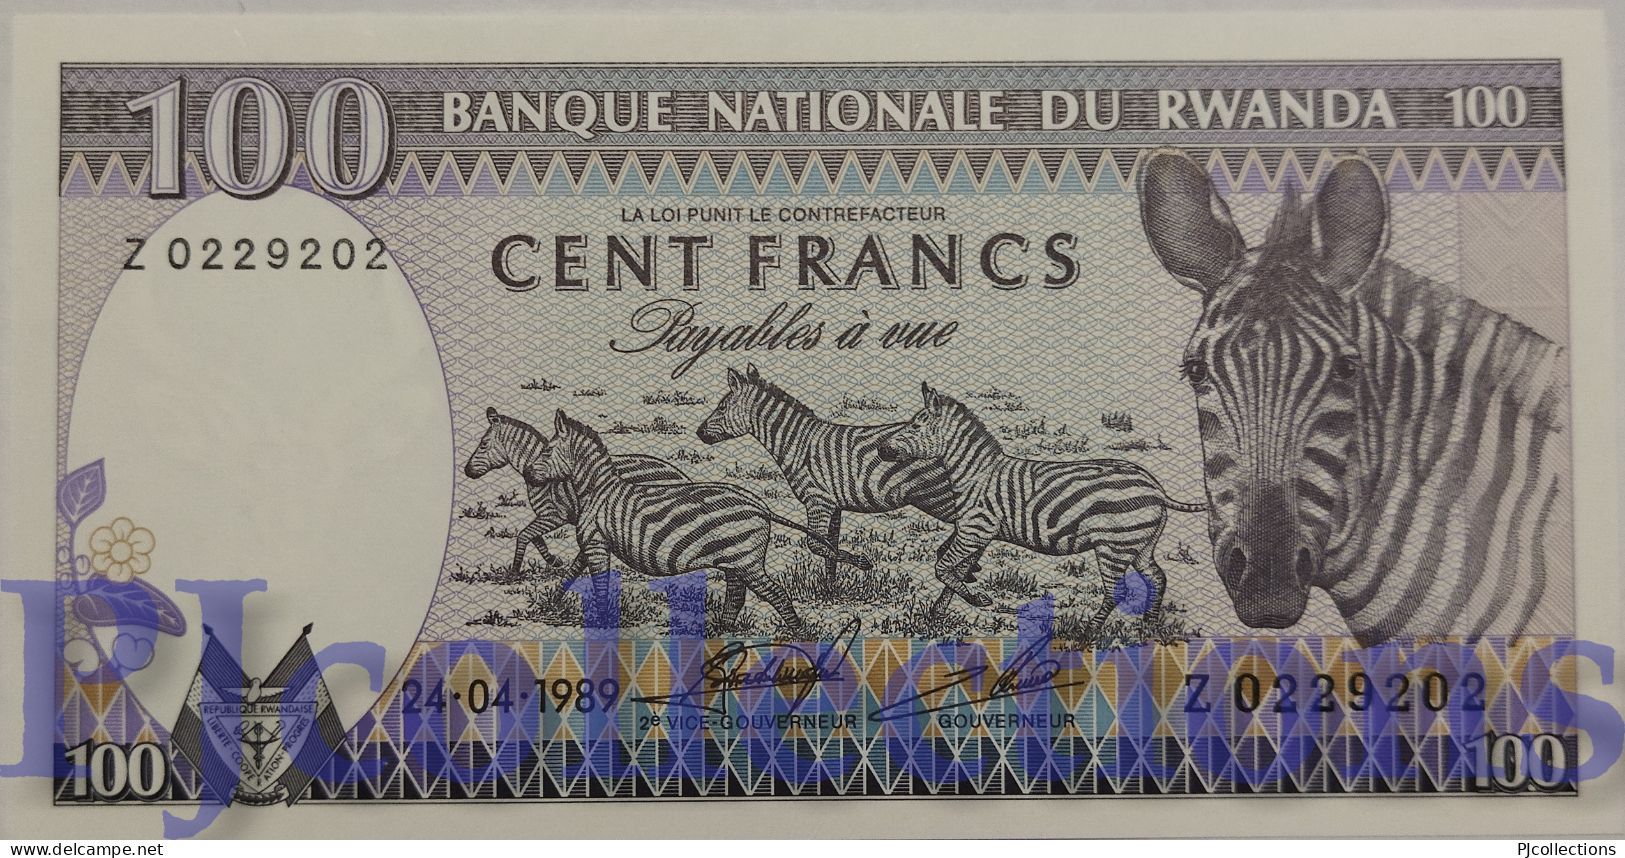 RWANDA 100 FRANCS 1989 PICK 19a REPLACEMENT UNC GOOD SERIAL NUMBER "Z0229202" - Rwanda